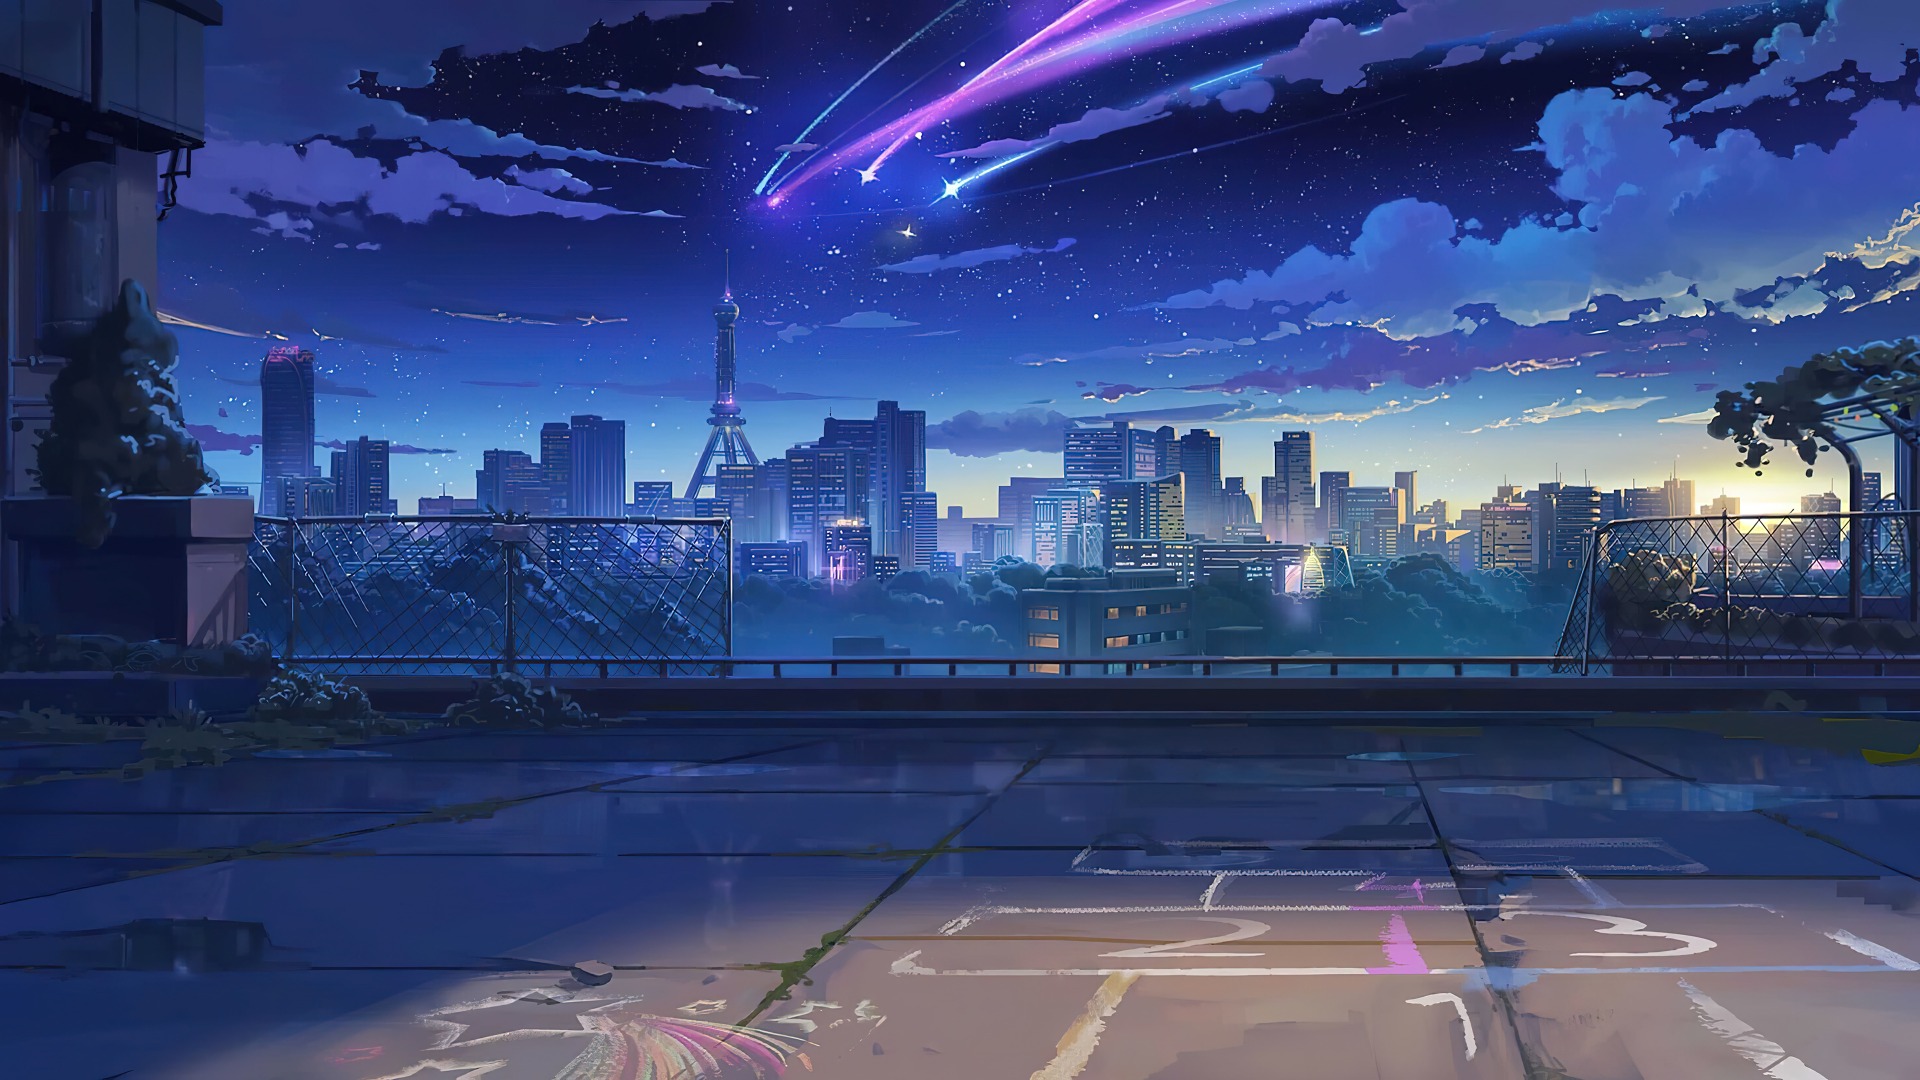 Wallpaper ID: 507086 / Anime, Comet, City, Night, Stars, 1080P, Original,  Sky, Building, Cloud free download